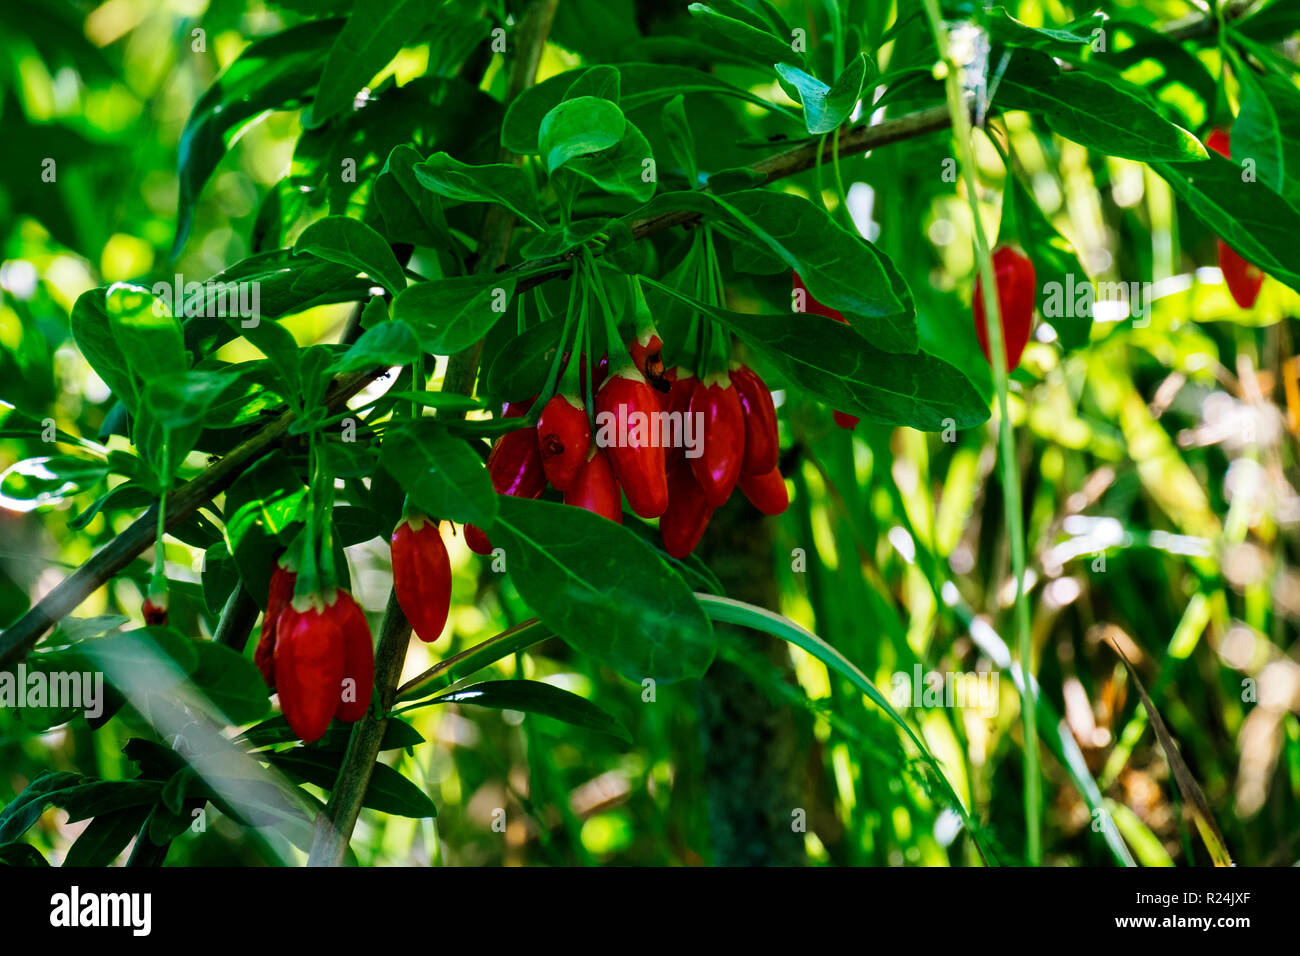 Red goji berries in green foliage on a tree (Lycium barbarum) Stock Photo